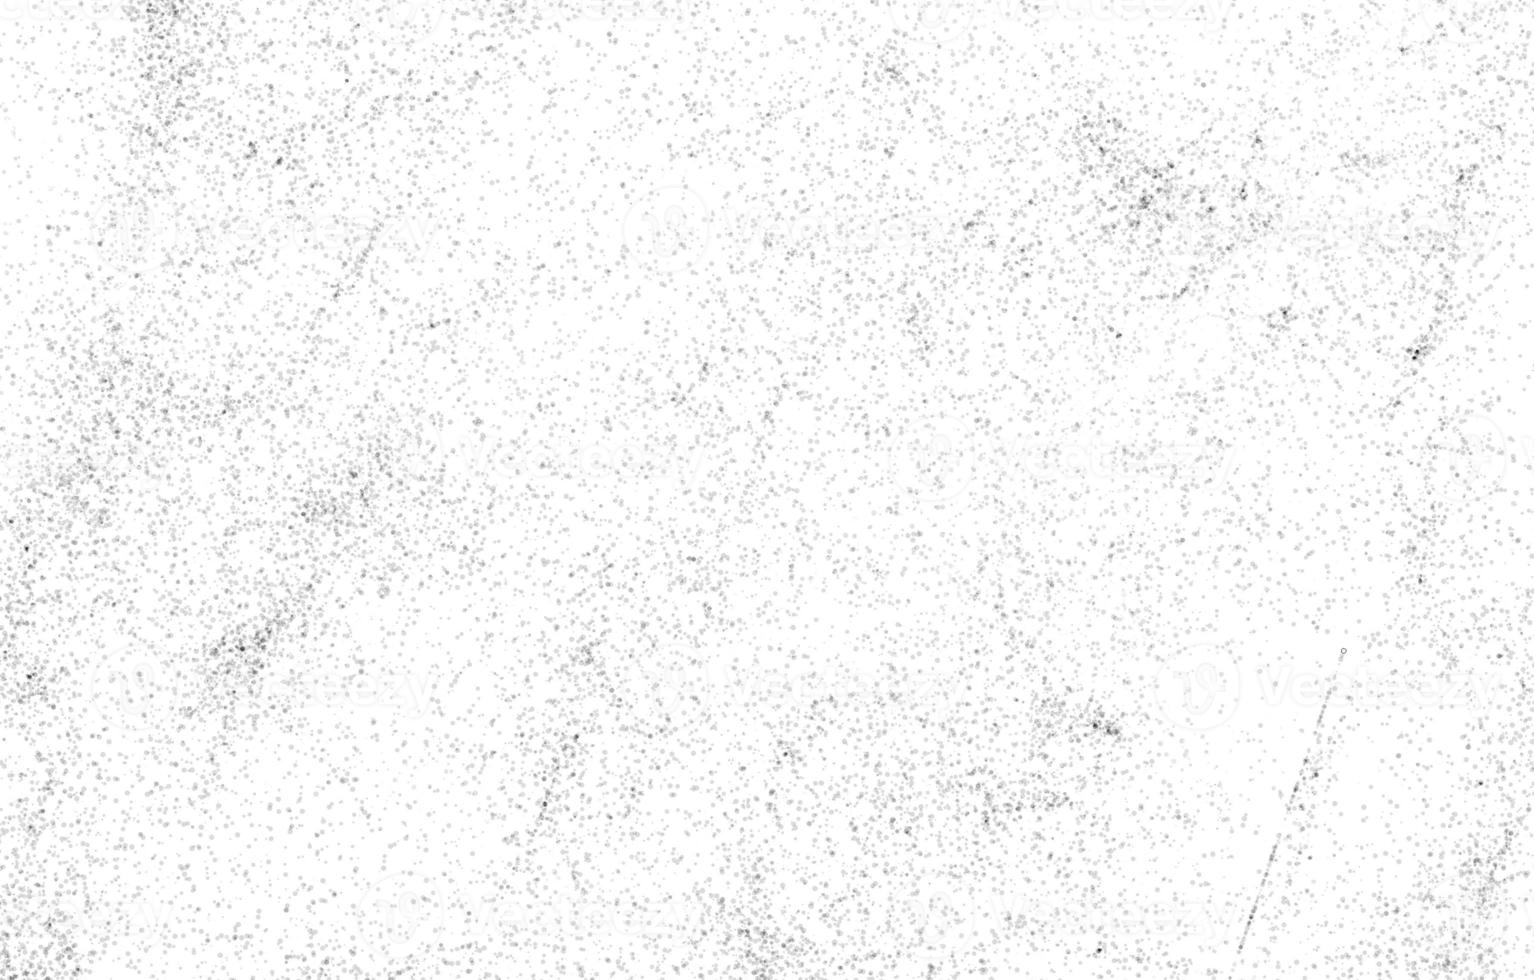 kras grunge stedelijke background.grunge zwart-wit stedelijk. donkere rommelige stof overlay nood achtergrond. foto